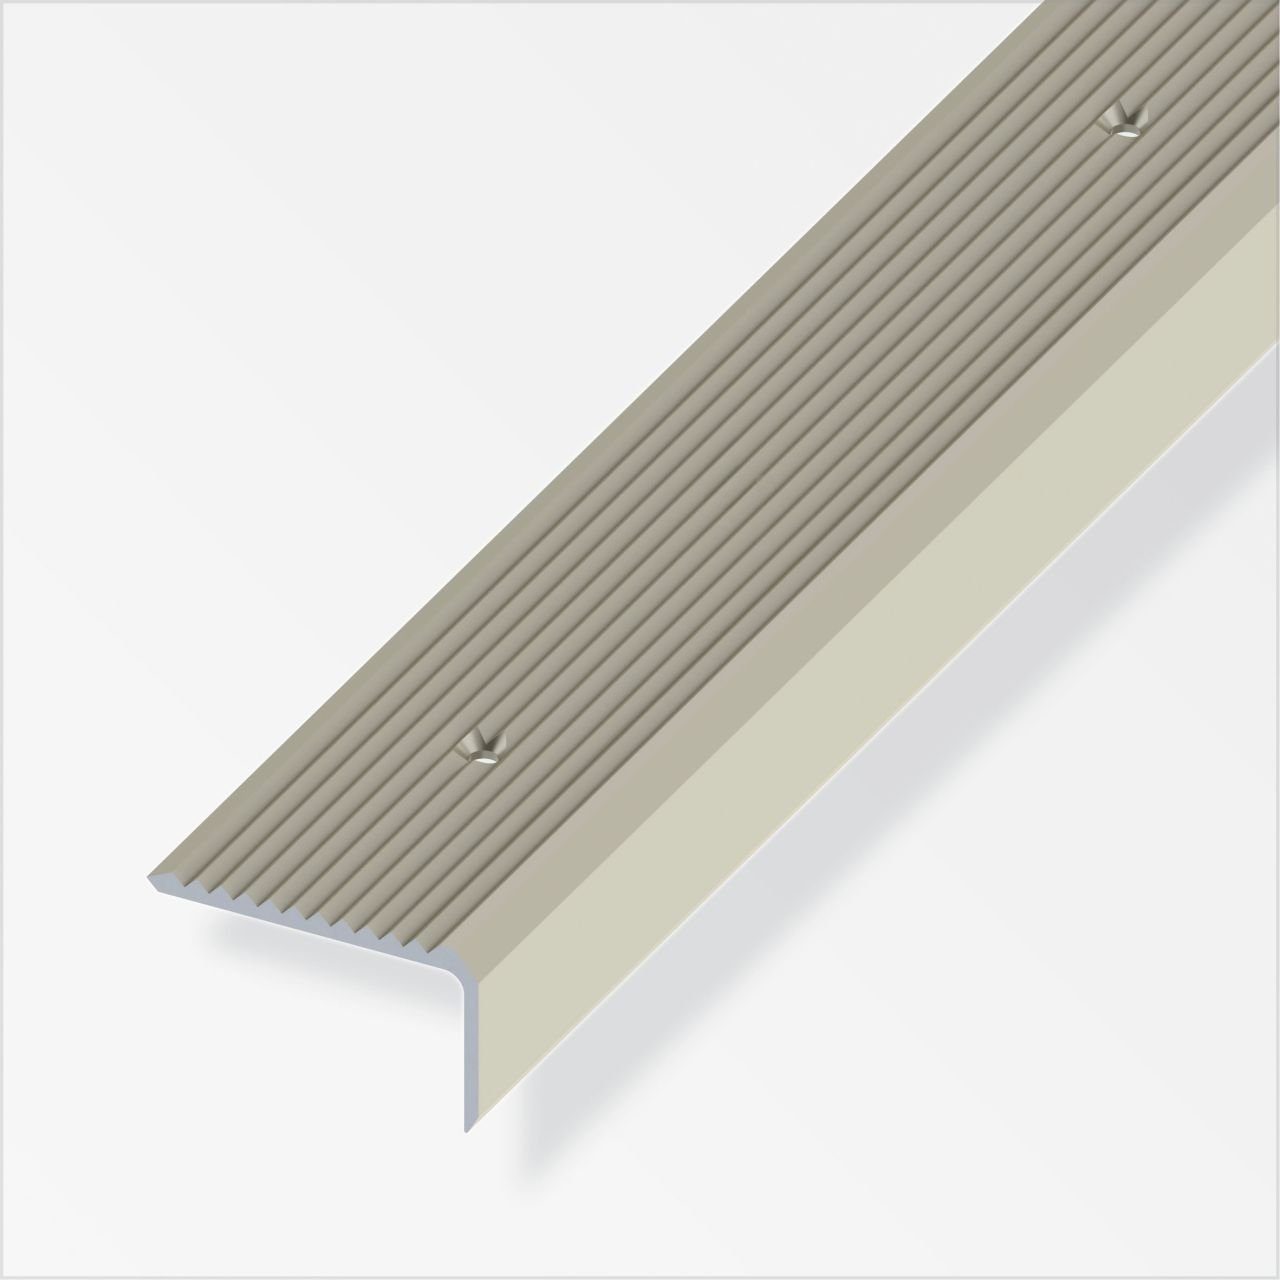 x 23 Treppenprofil Aluminium 1 alfer Treppenstufen-Seitenblende mm 41 m, alfer